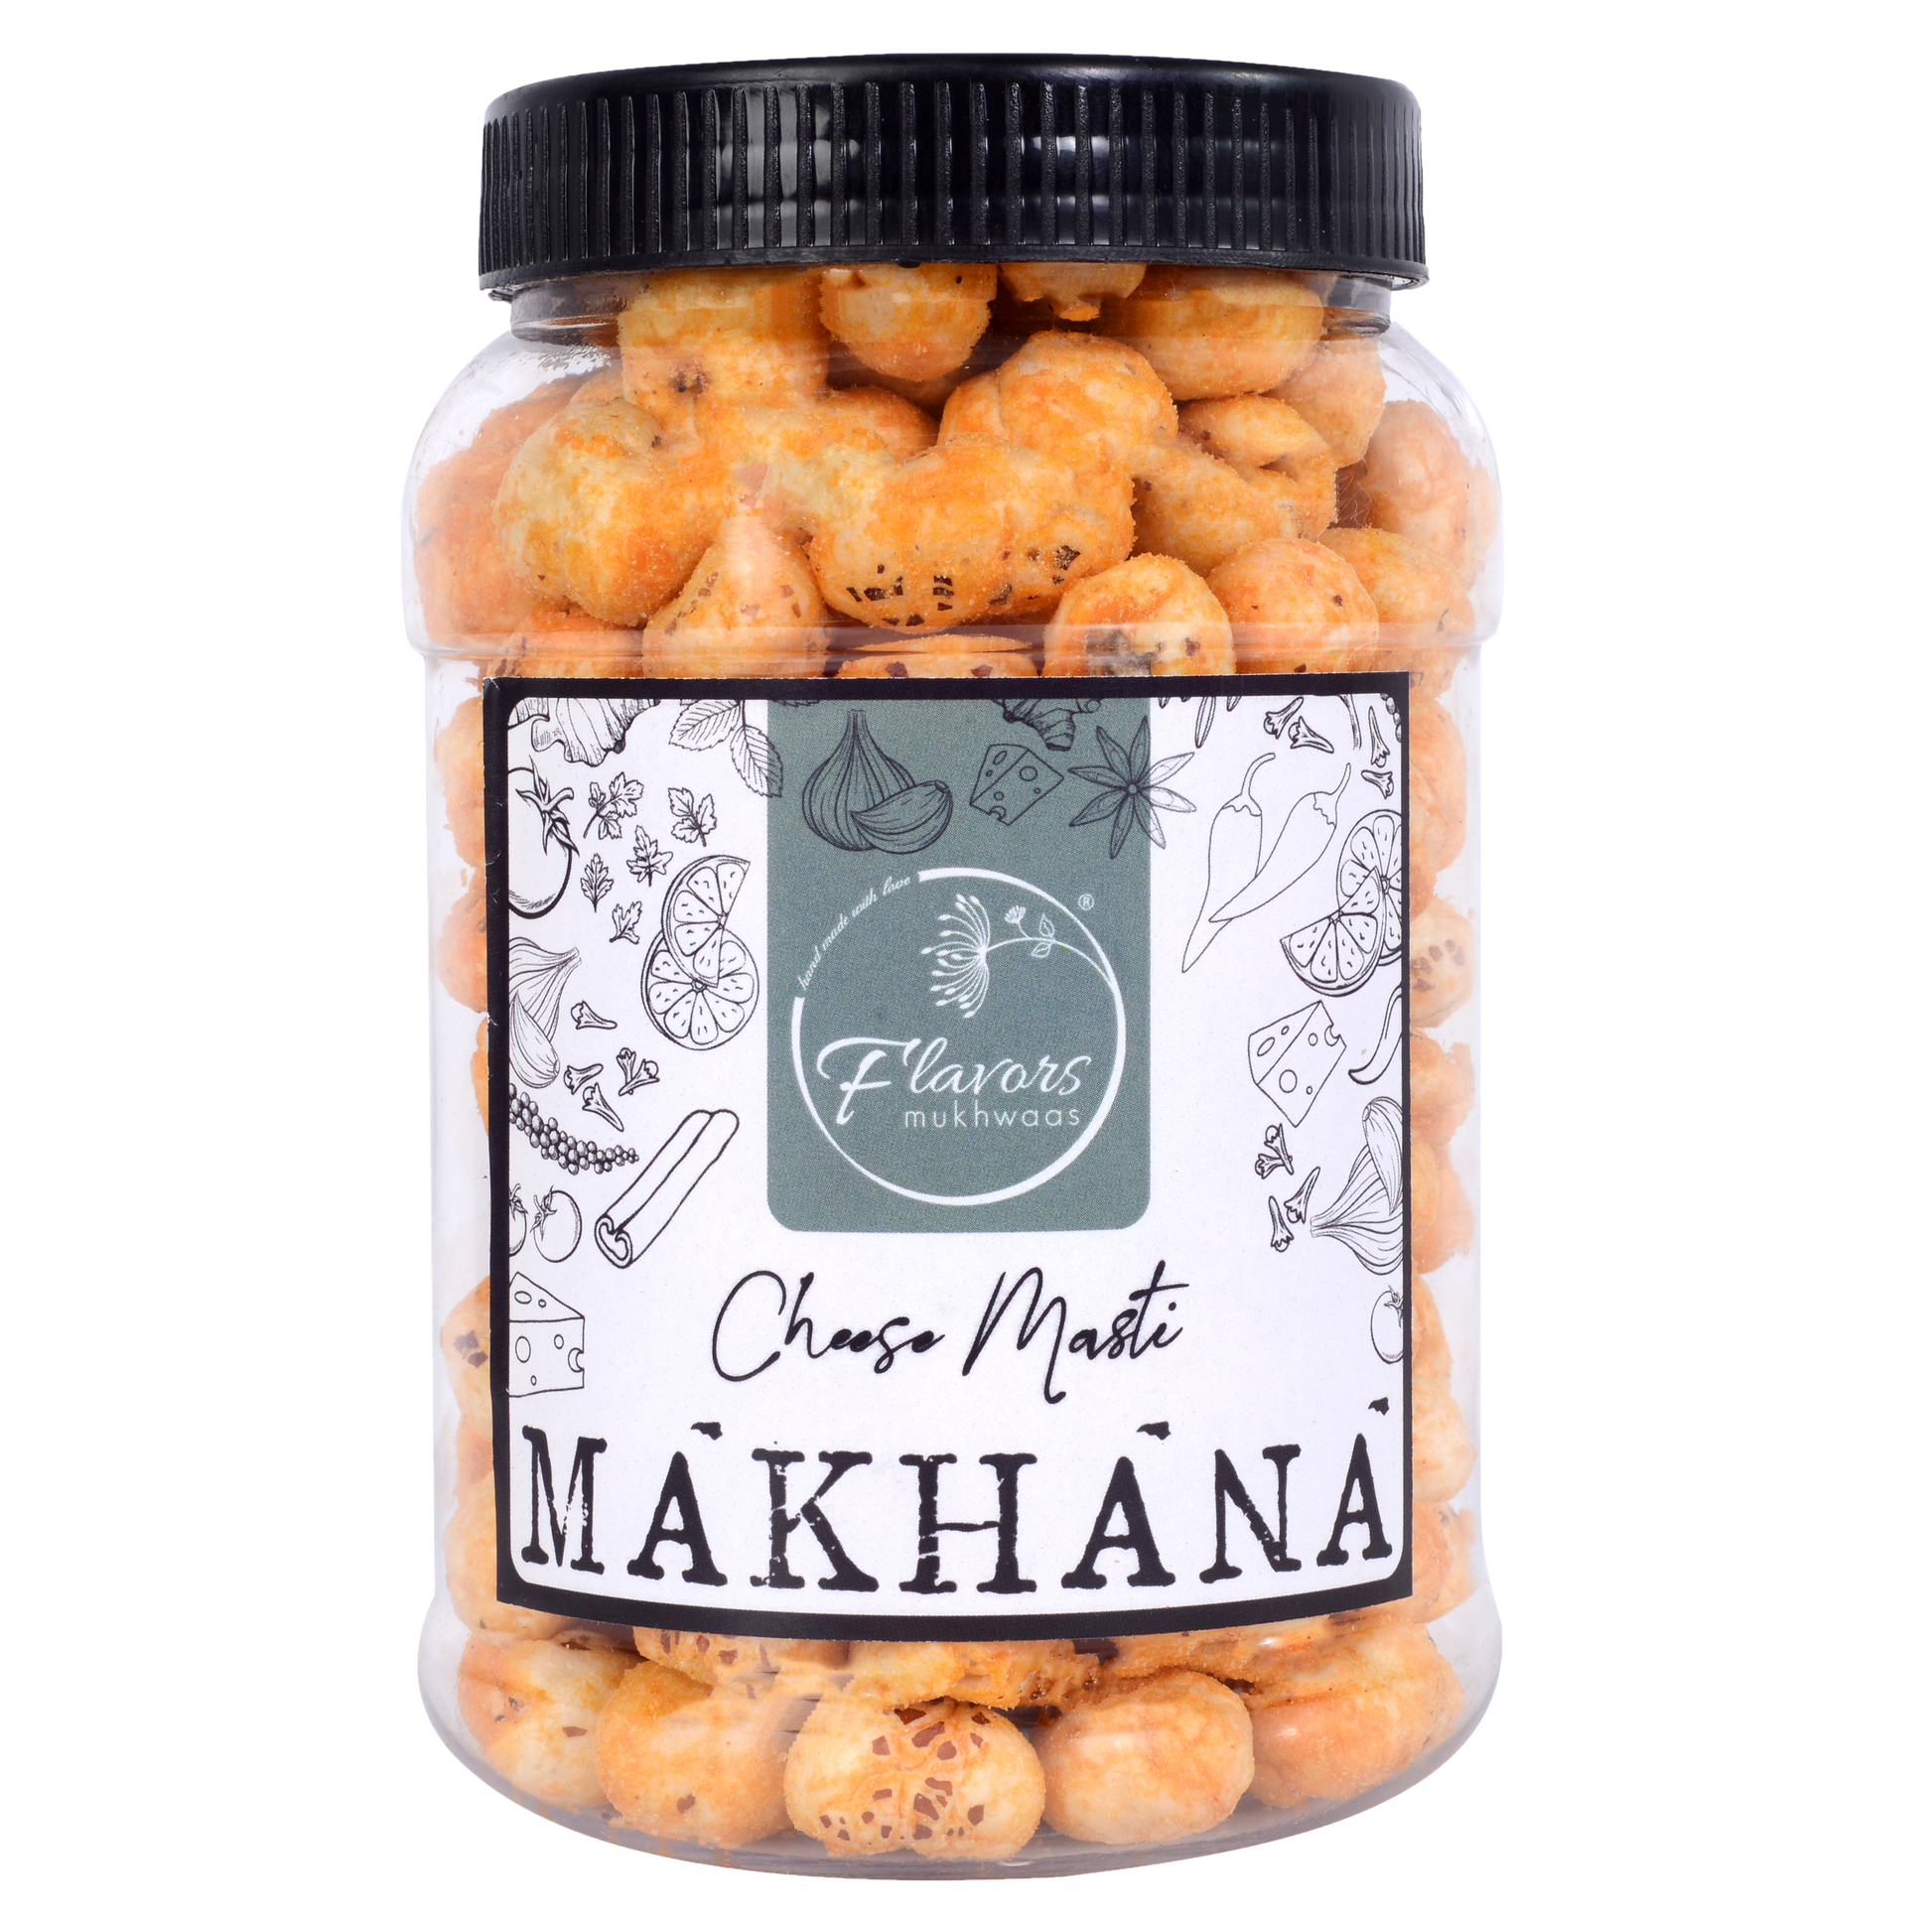 Cheese Masti Makhana (Fox Nuts) flavors mukhwaas